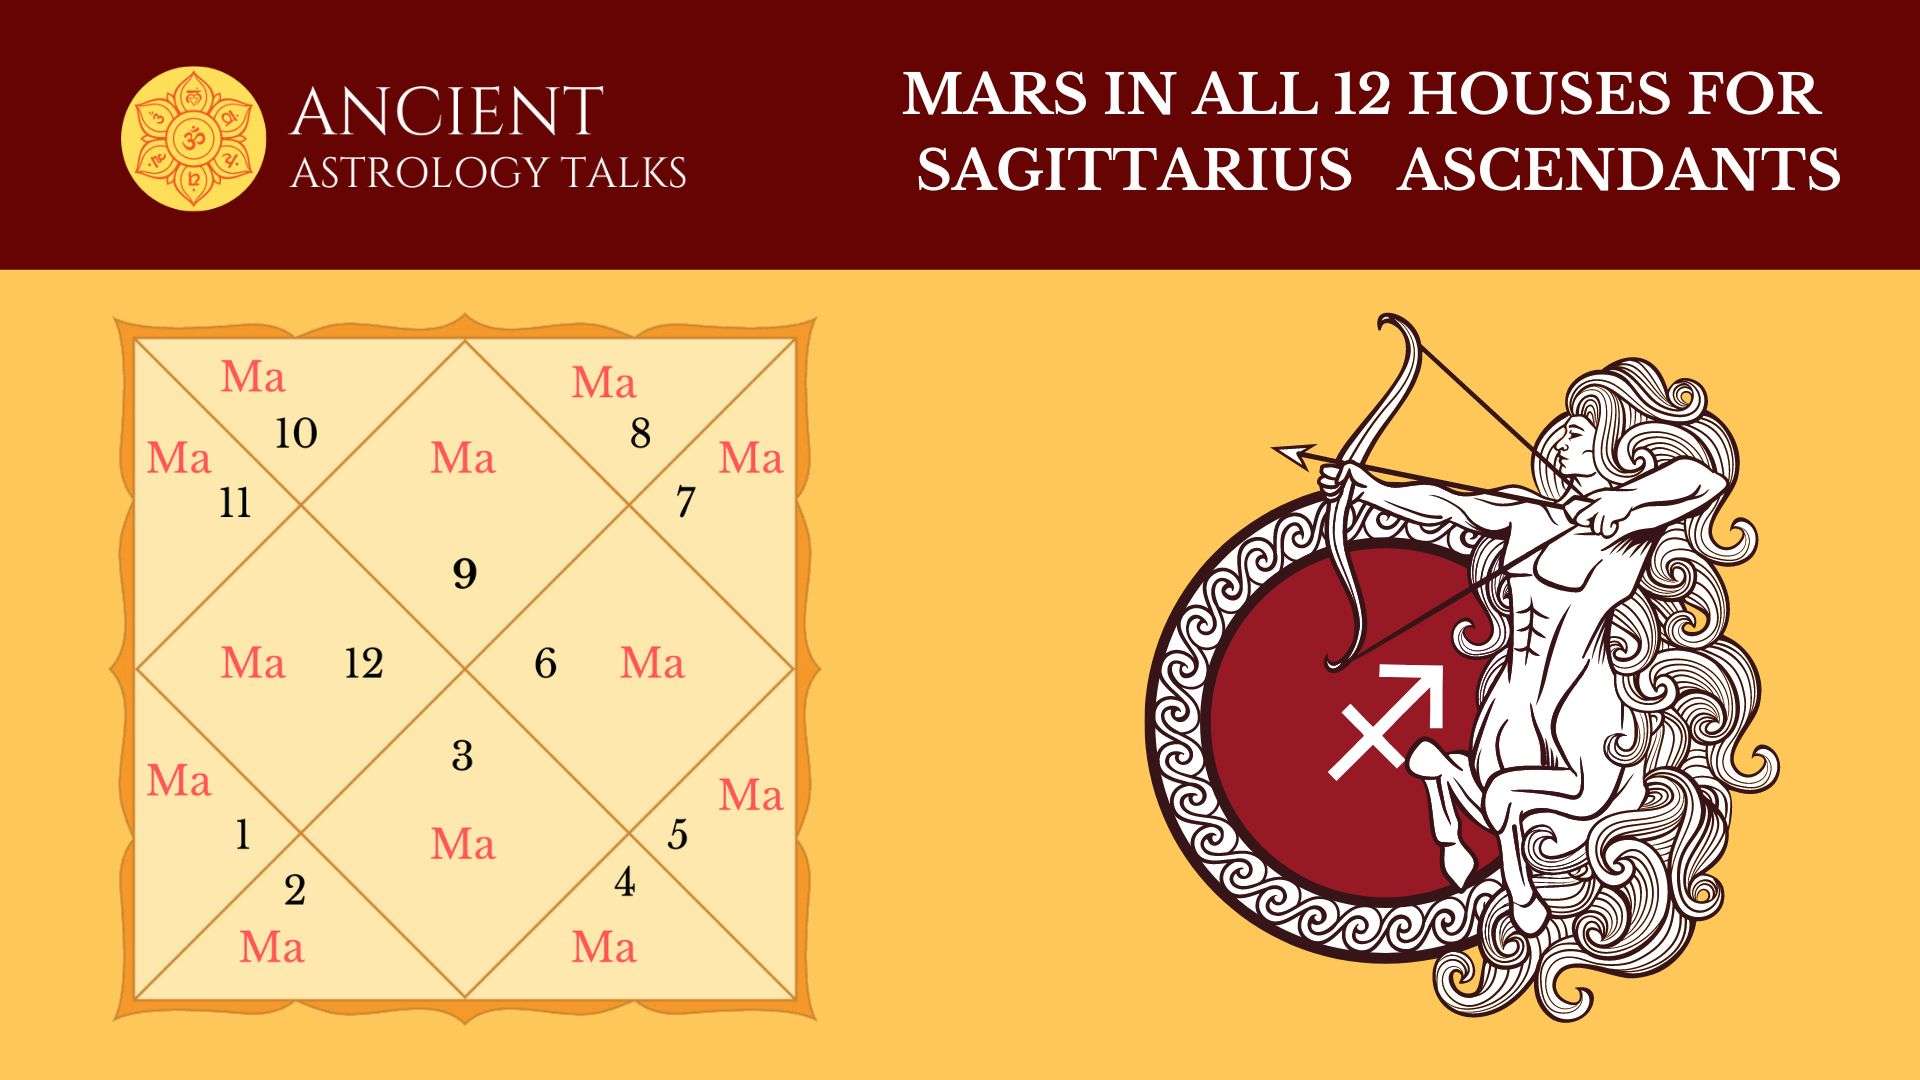 Mars in all 12 Houses for Sagittarius Ascendants - Ancient Astrology Talks